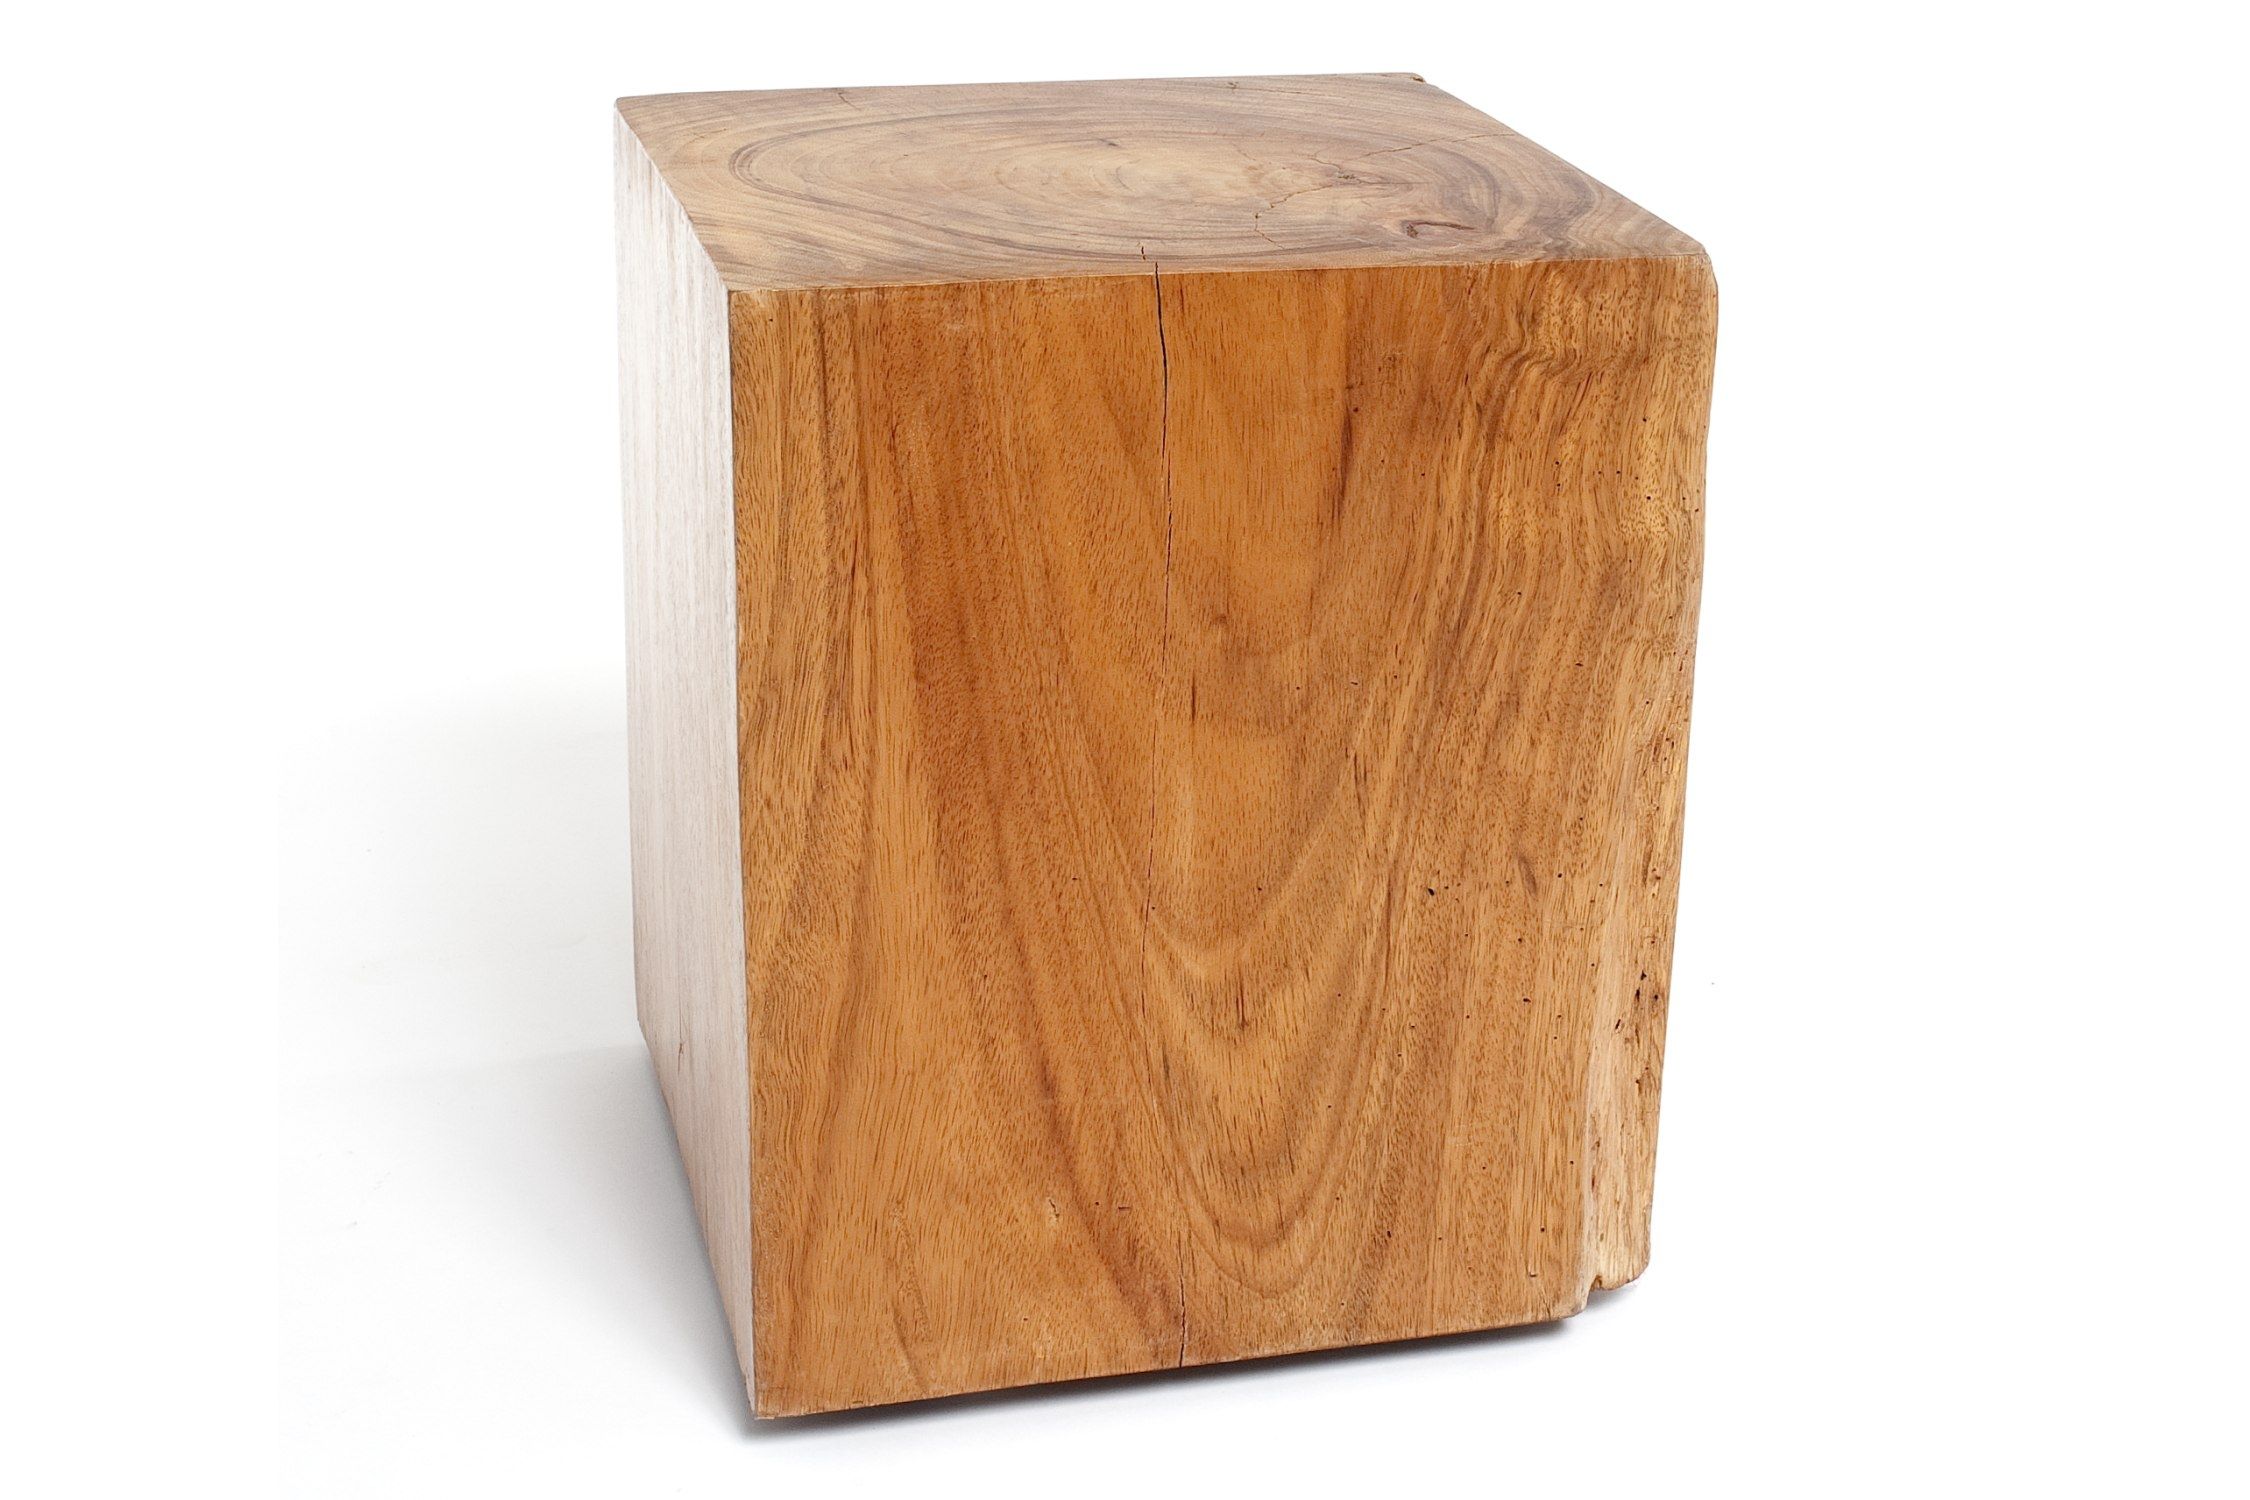 contemporary-stools-reclaimed-wood-65799-1877243.jpg